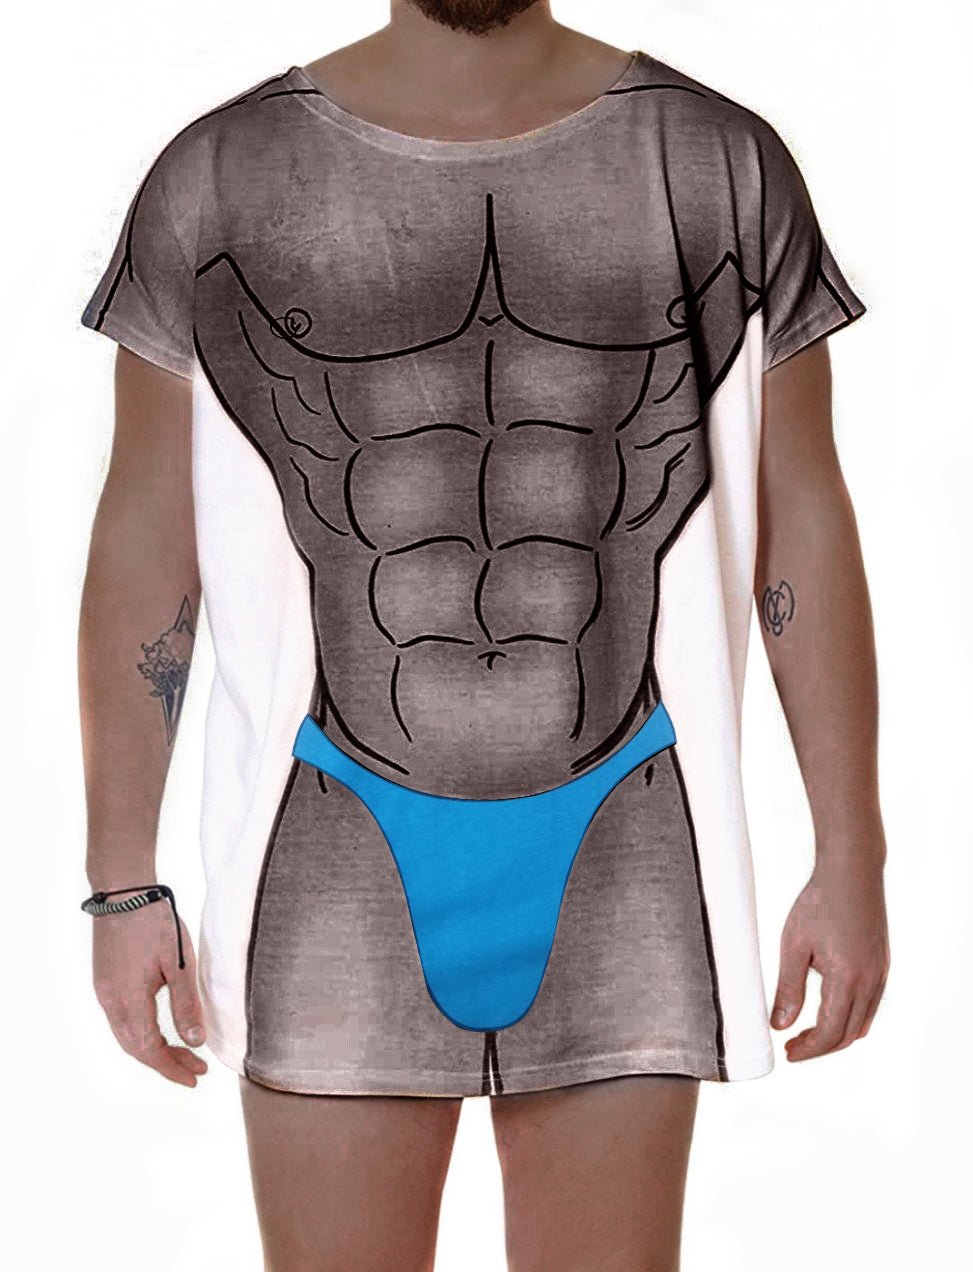 LA Imprints Fantasy Coverup Men's Dark Skin Blue Thong Body Coverup T-Shirt